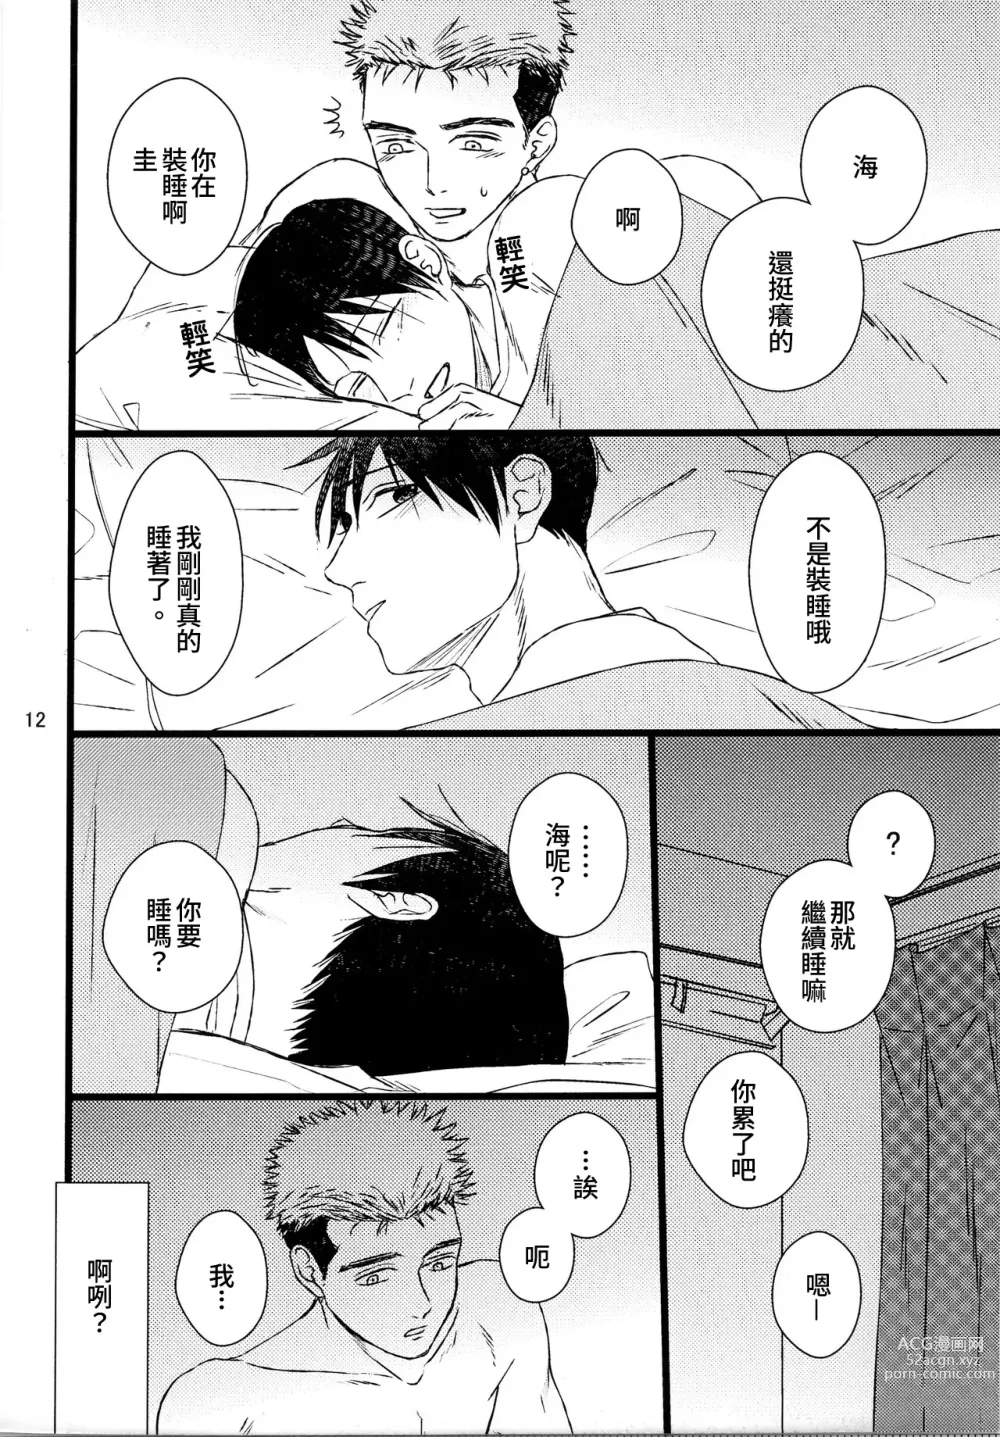 Page 10 of doujinshi Ajin 亜人